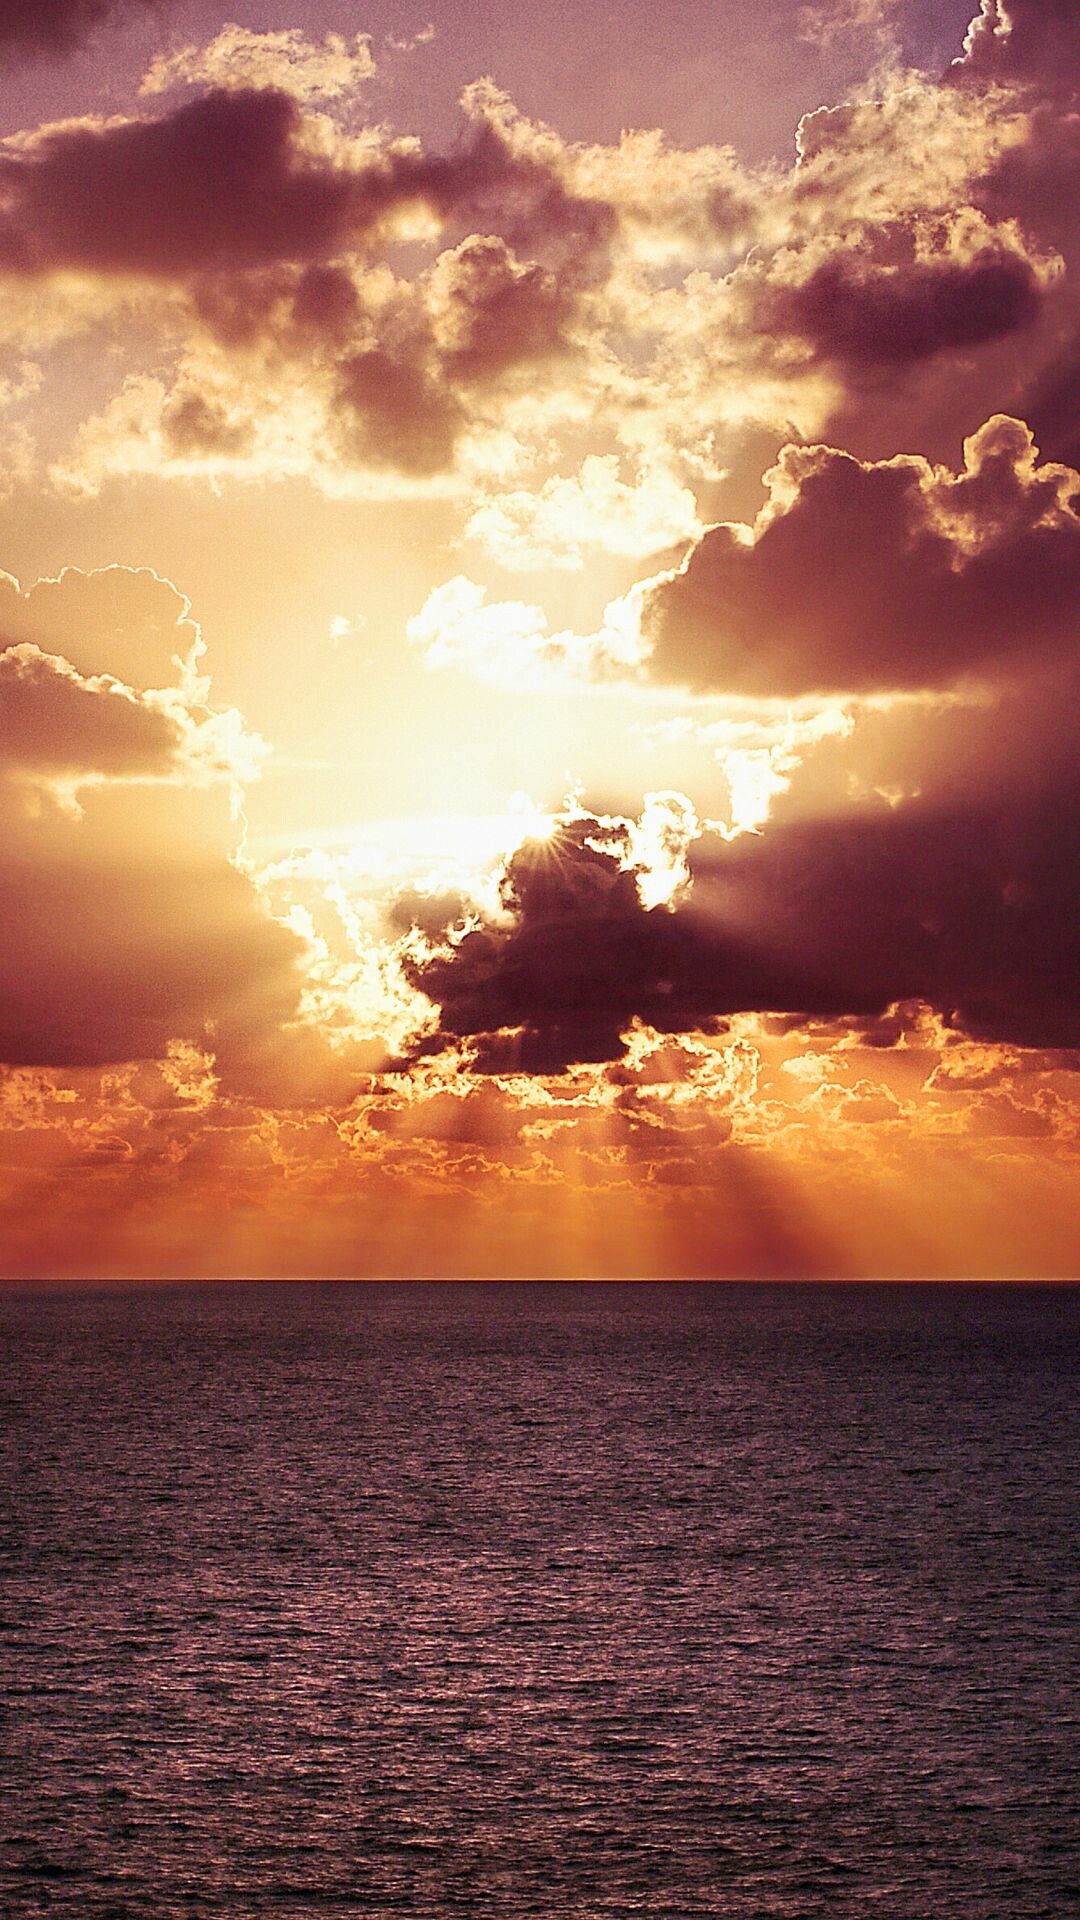 Sunrise: Crack of dawn, The sun breaking through a dark-bottomed cloud. 1080x1920 Full HD Wallpaper.